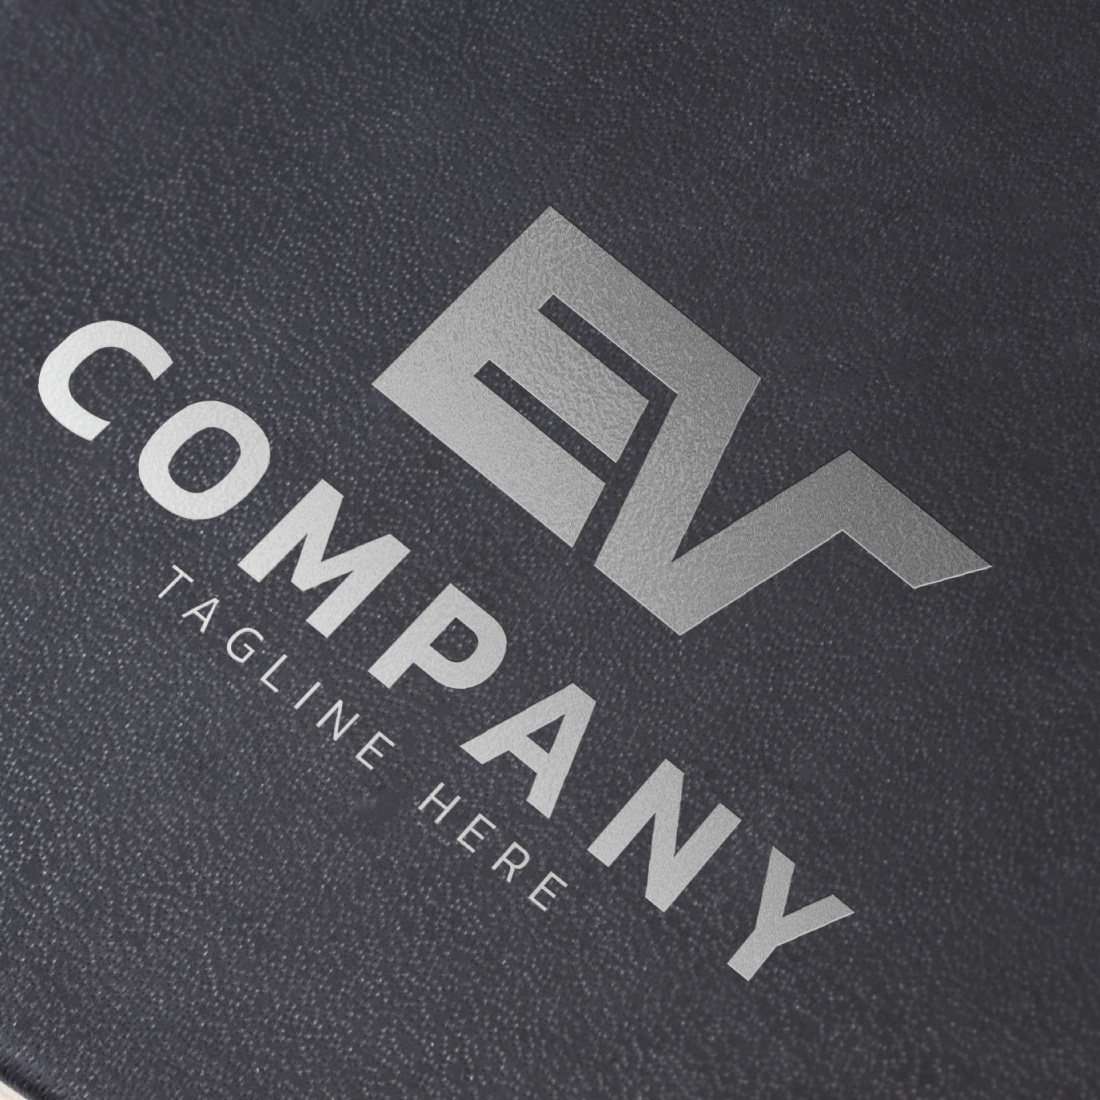 EV logo cover image.